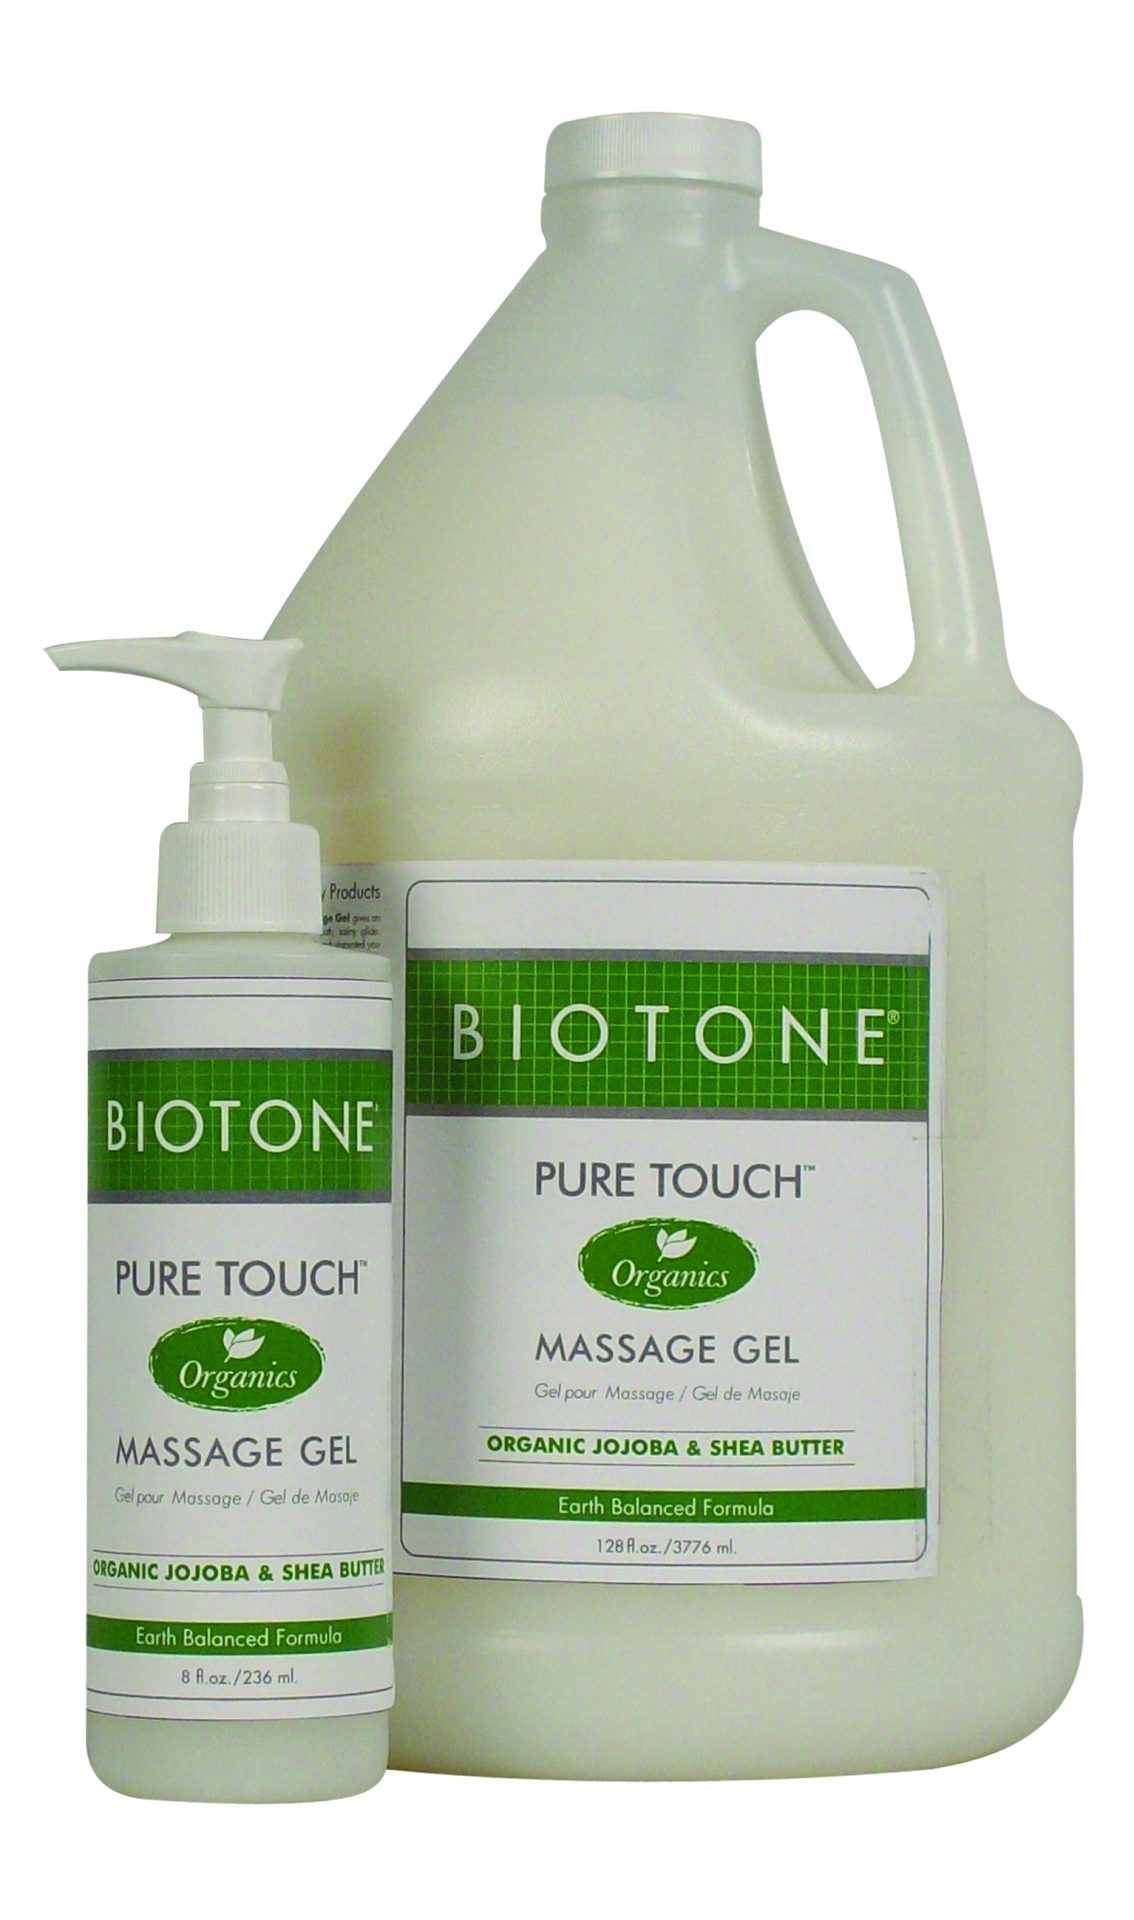 BIOTONE Introduces New Pure Touch Organics Massage Gel, MASSAGE Magazine